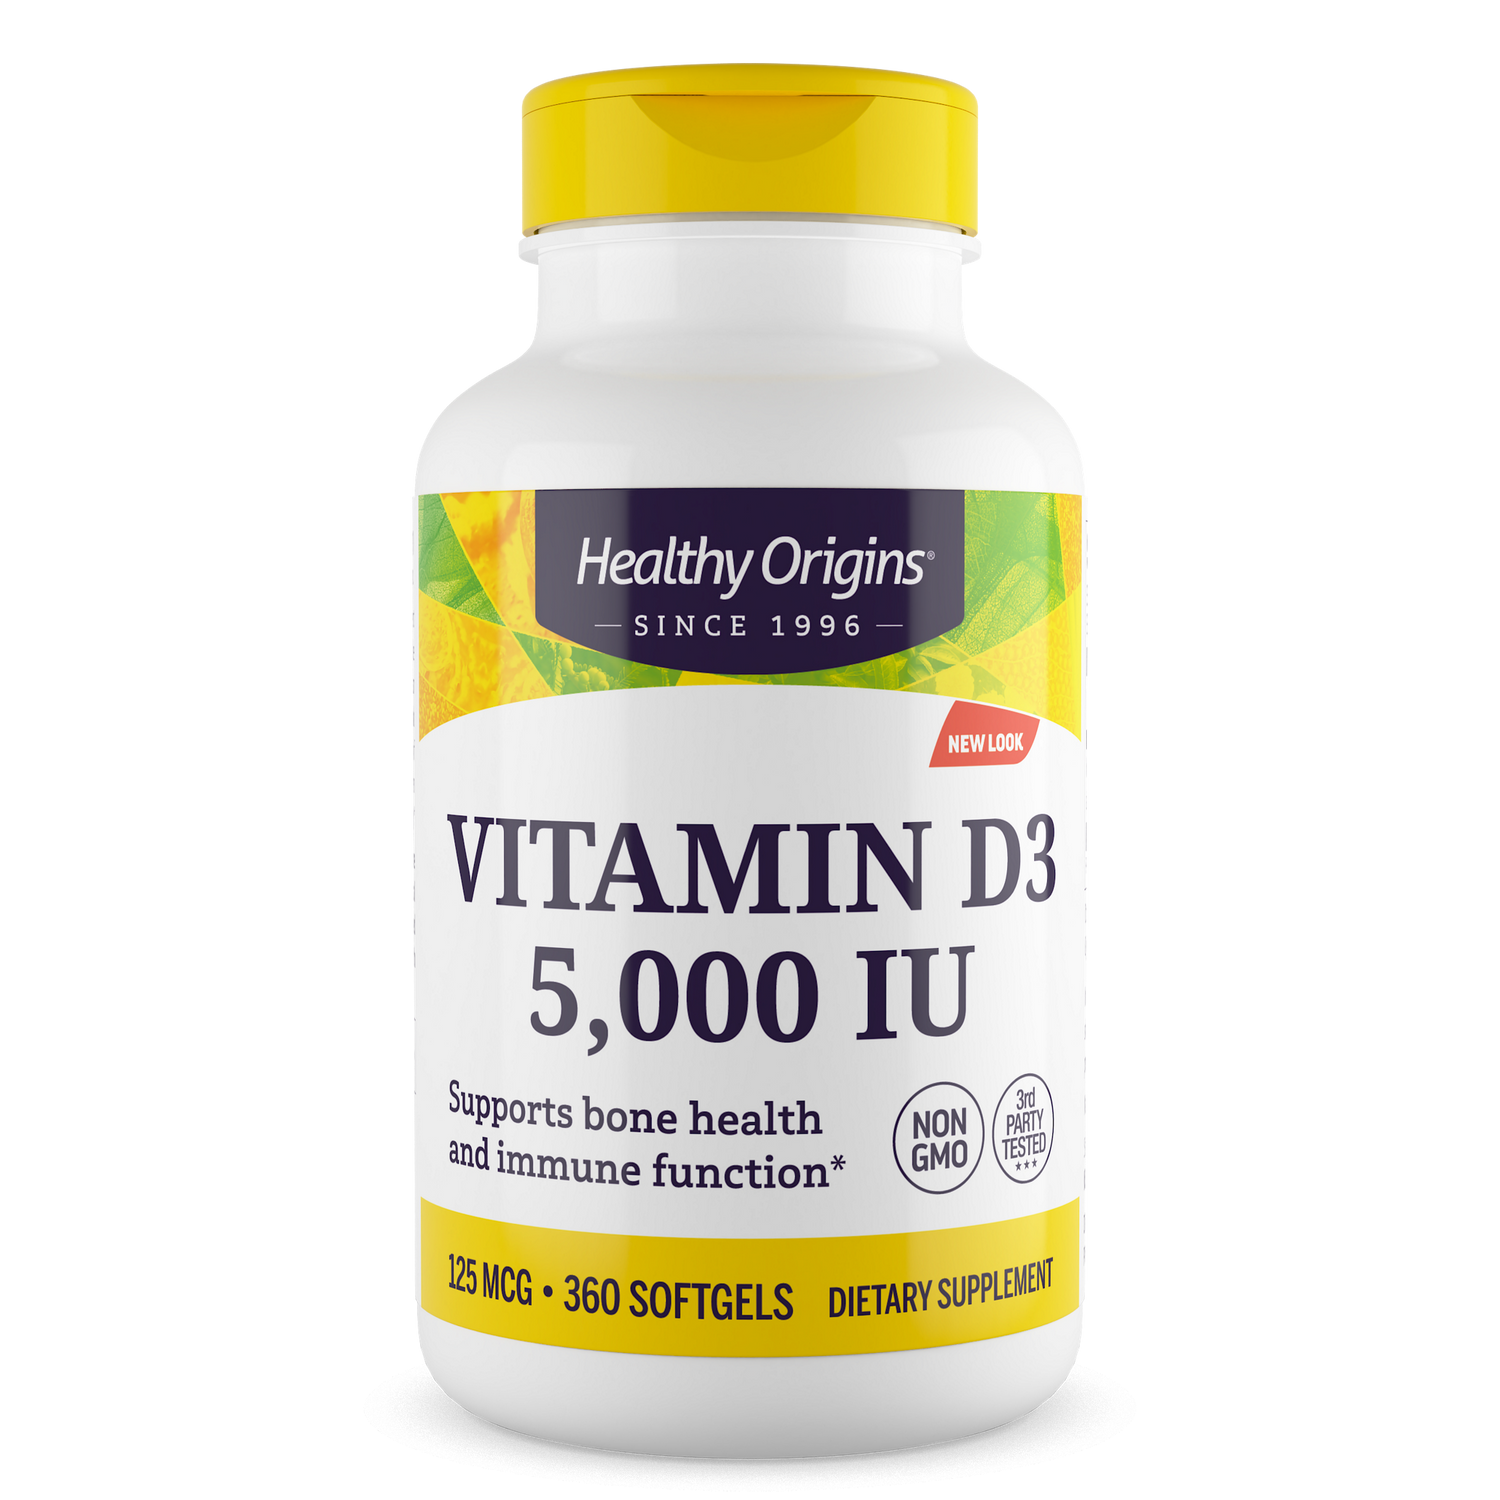 Vitamin Dз 5,000 IU